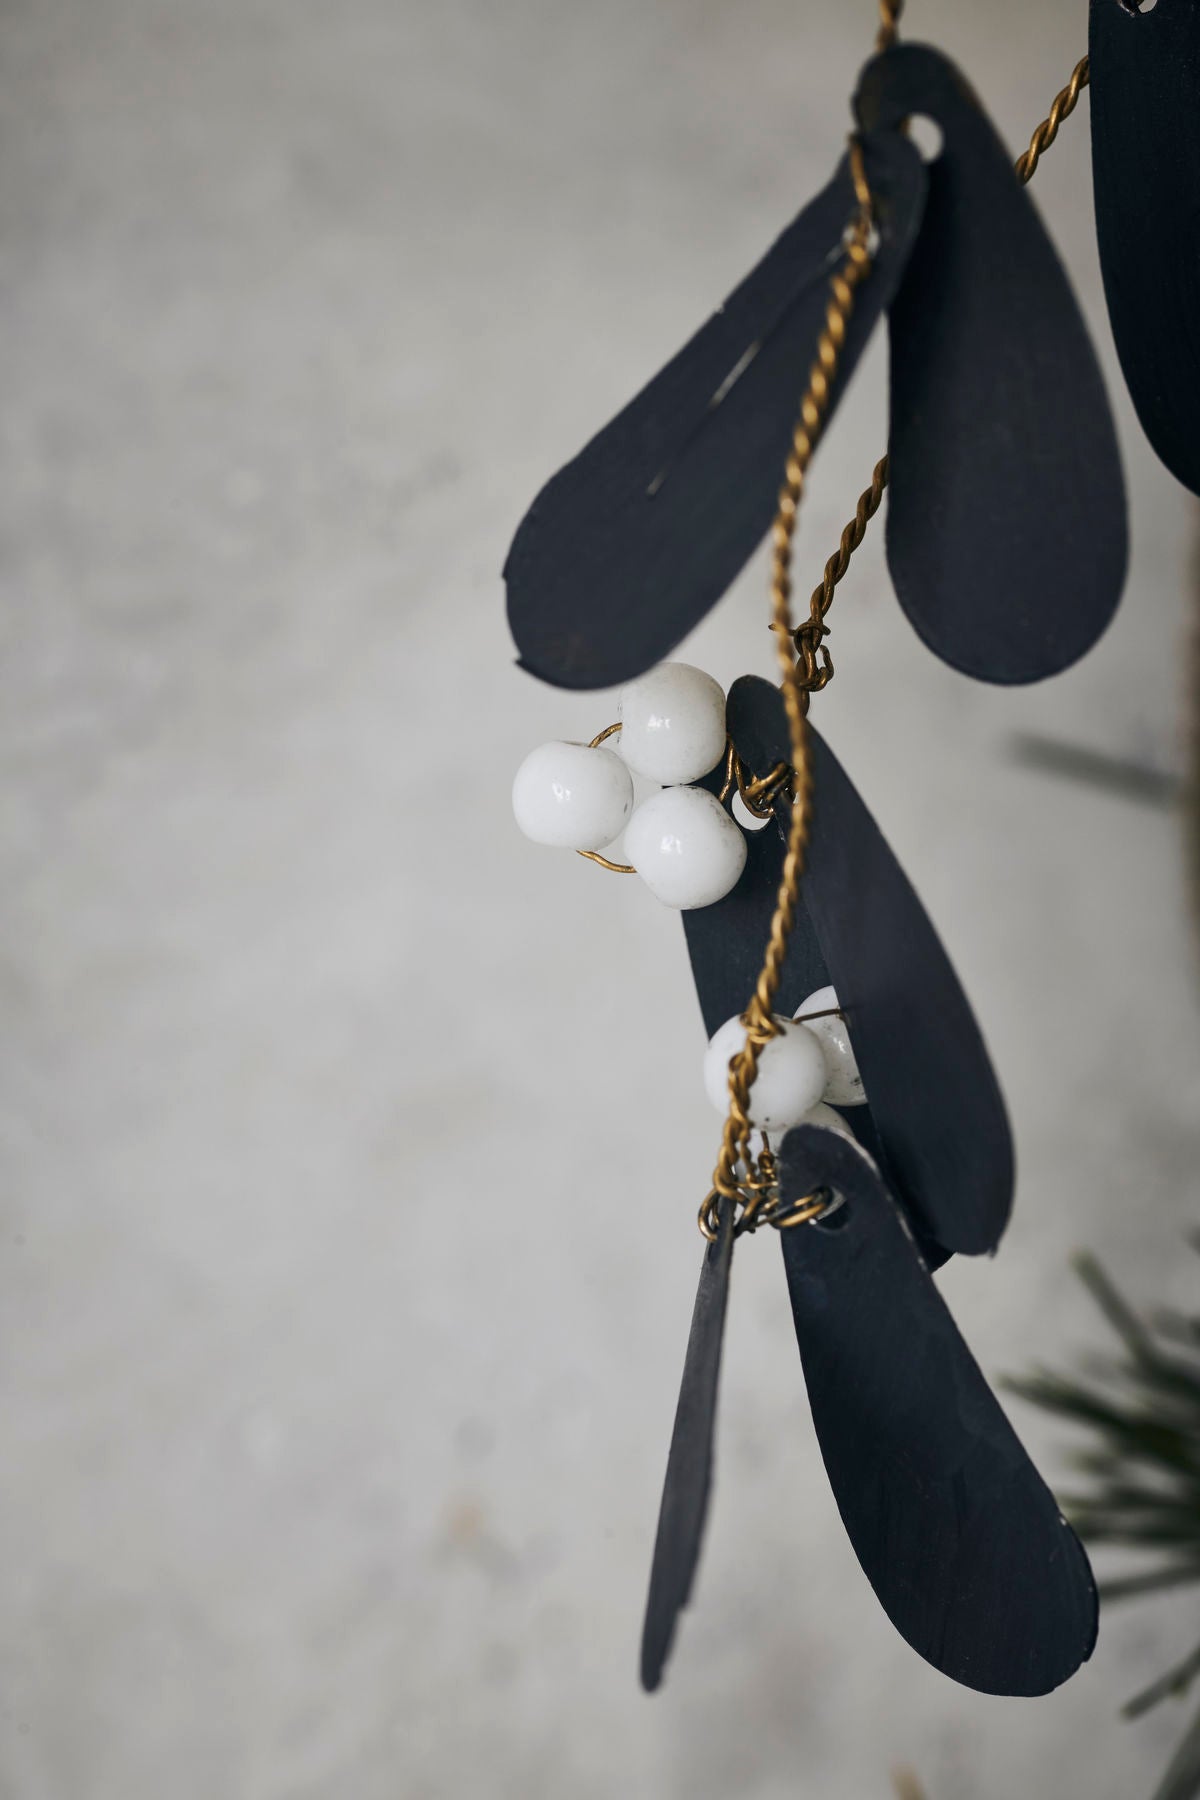 Black Mistletoe Decoration in Metal & Wire - Lifestory - House Doctor